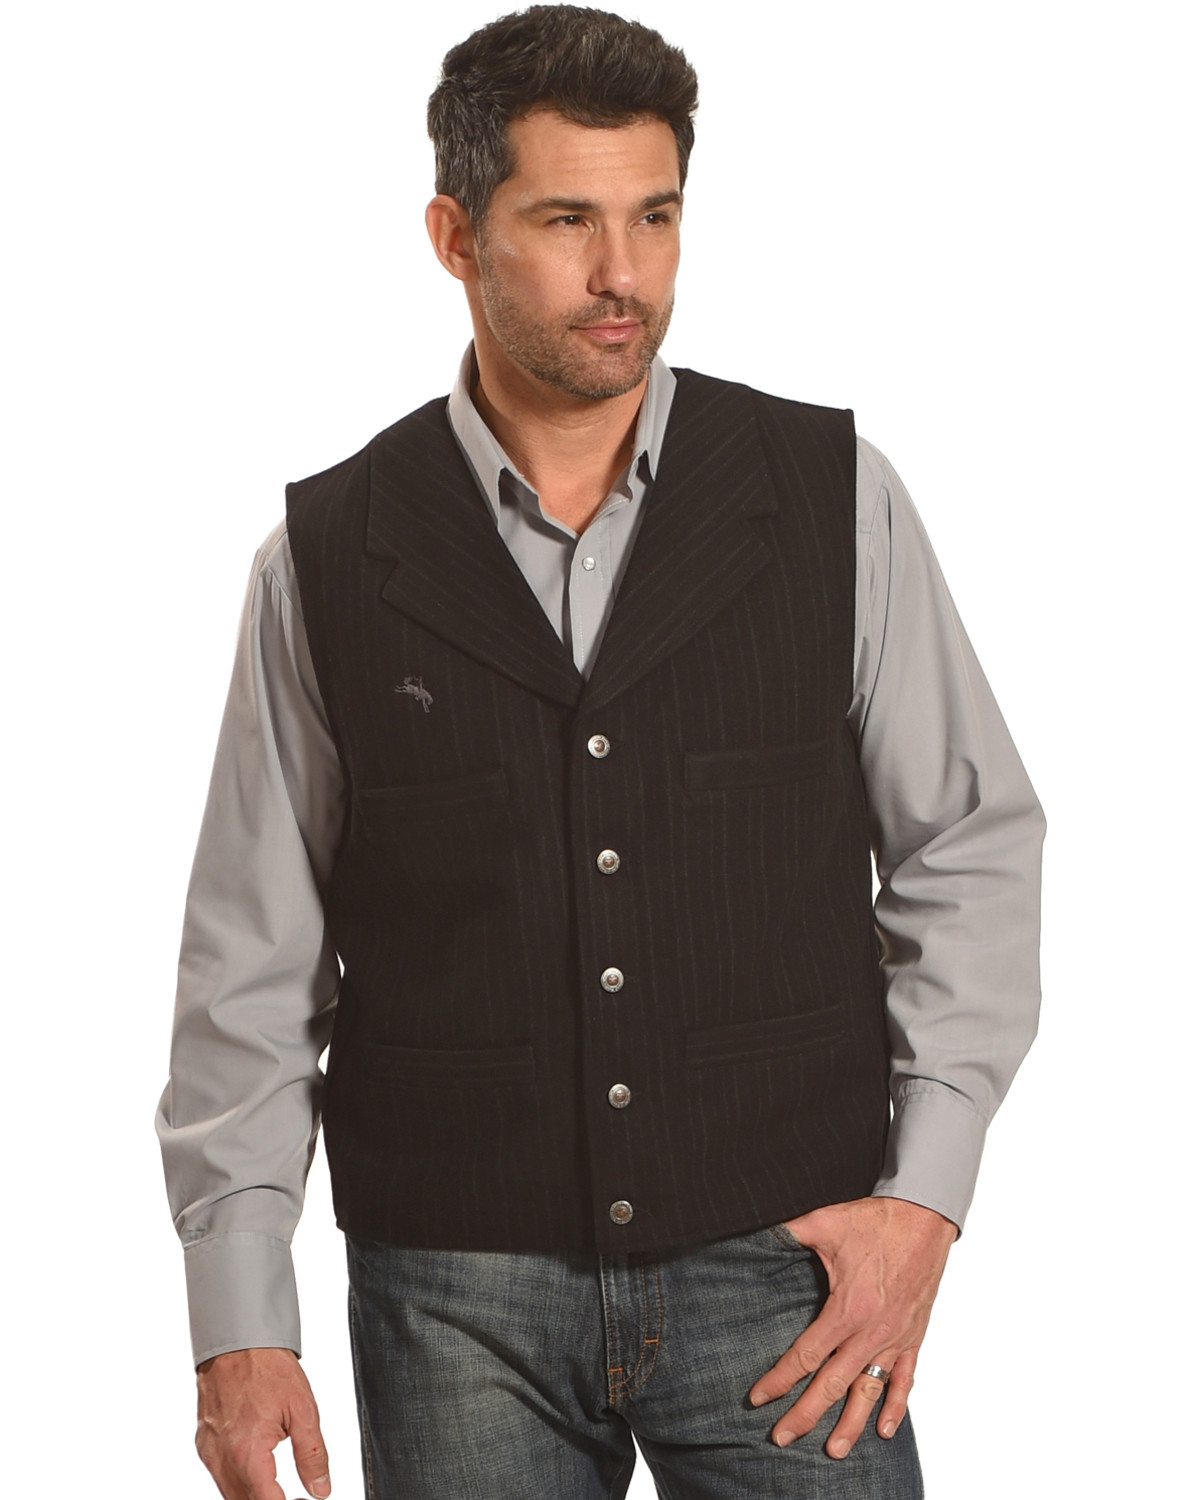 Wyoming Traders Men's Banker's Wool Vest